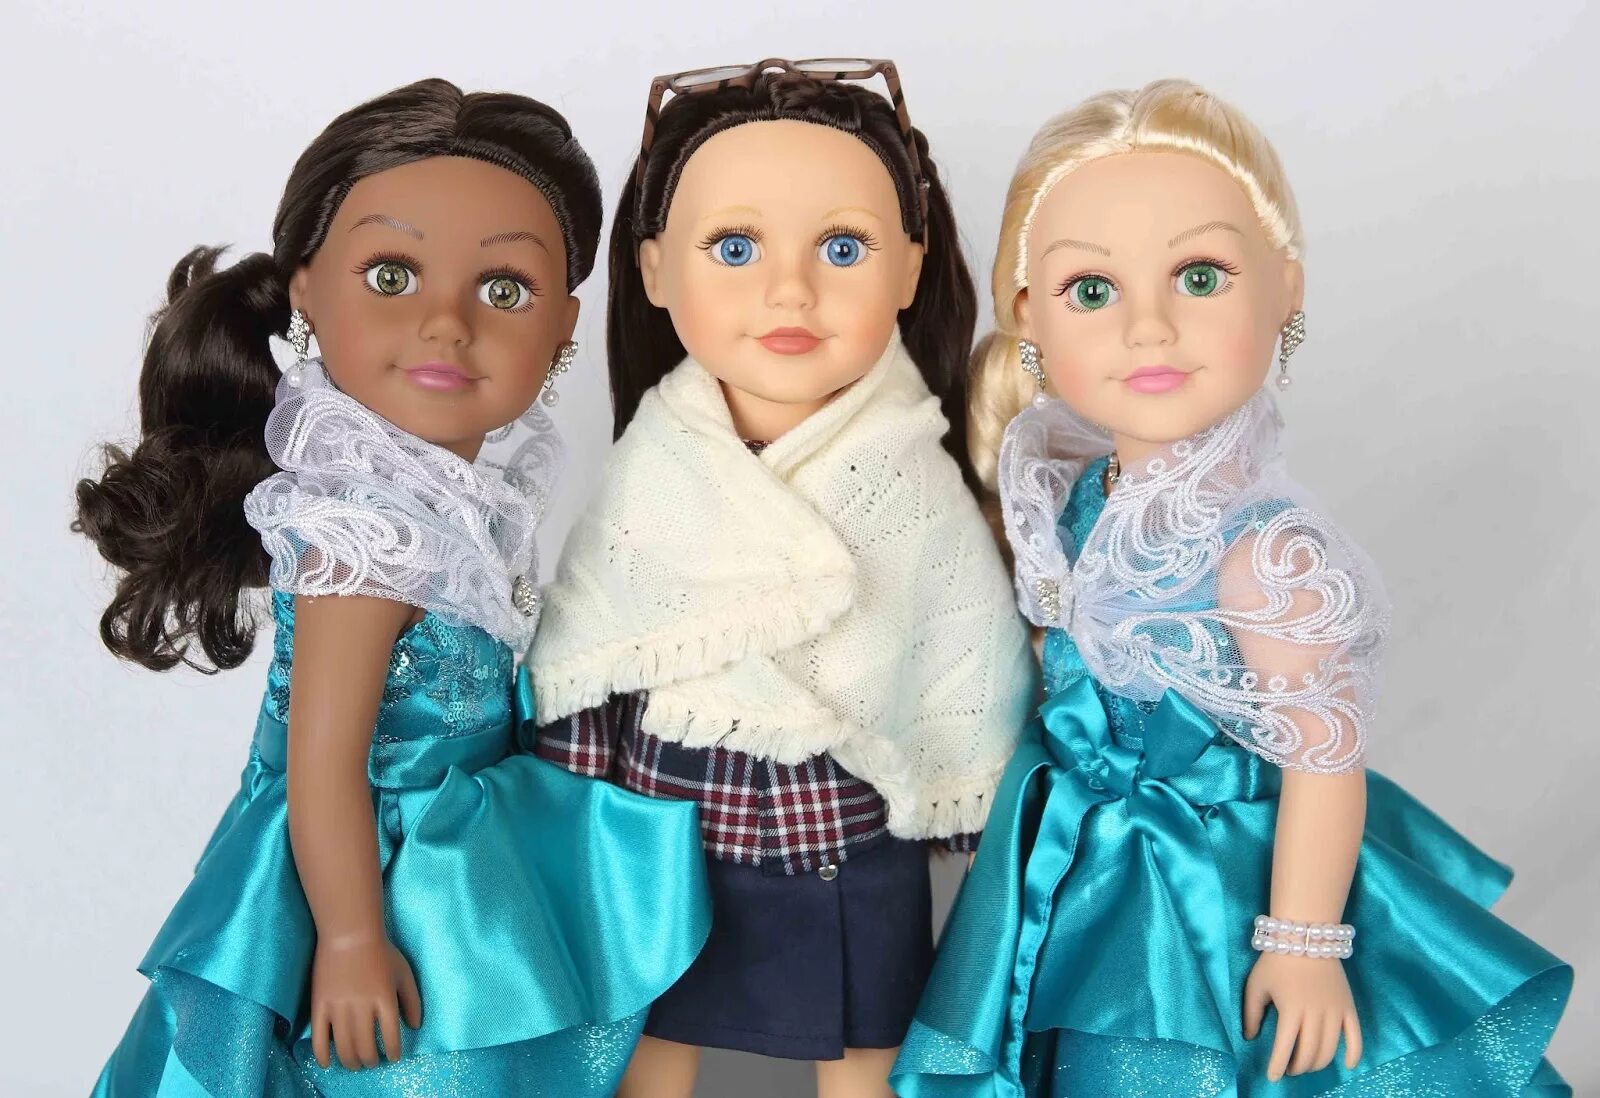 Journey girls. Куклы Джорни герлз. Journey girls куклы. Набор одежды Journey girls. Творим для наших кукол.